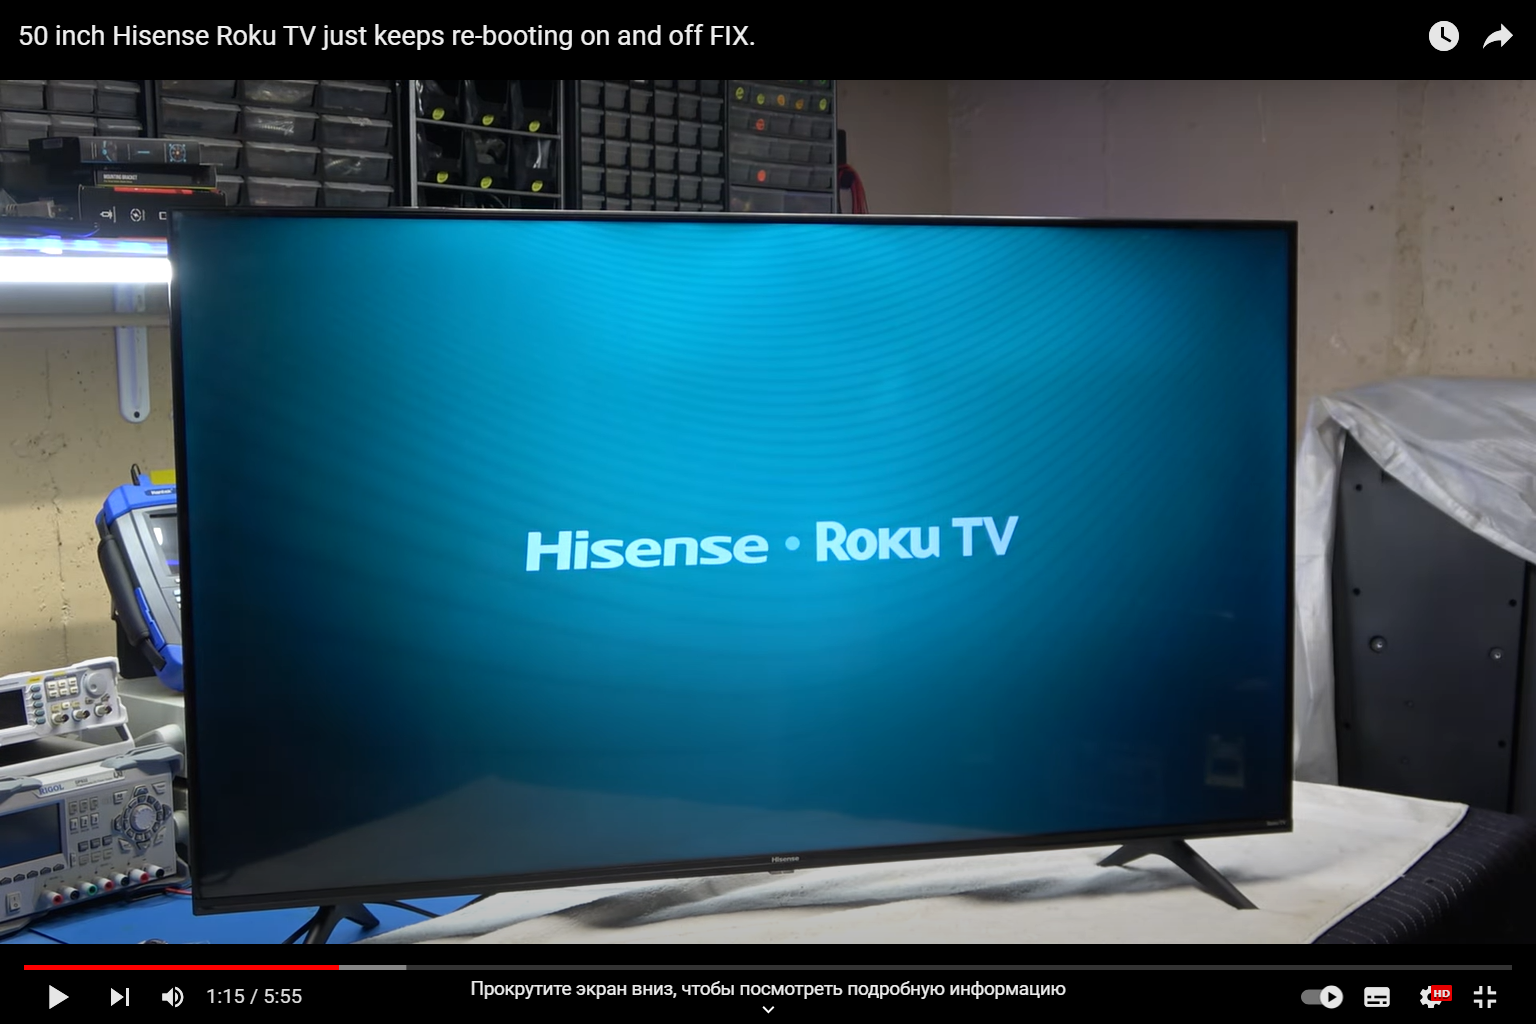 Hisense Roku TV